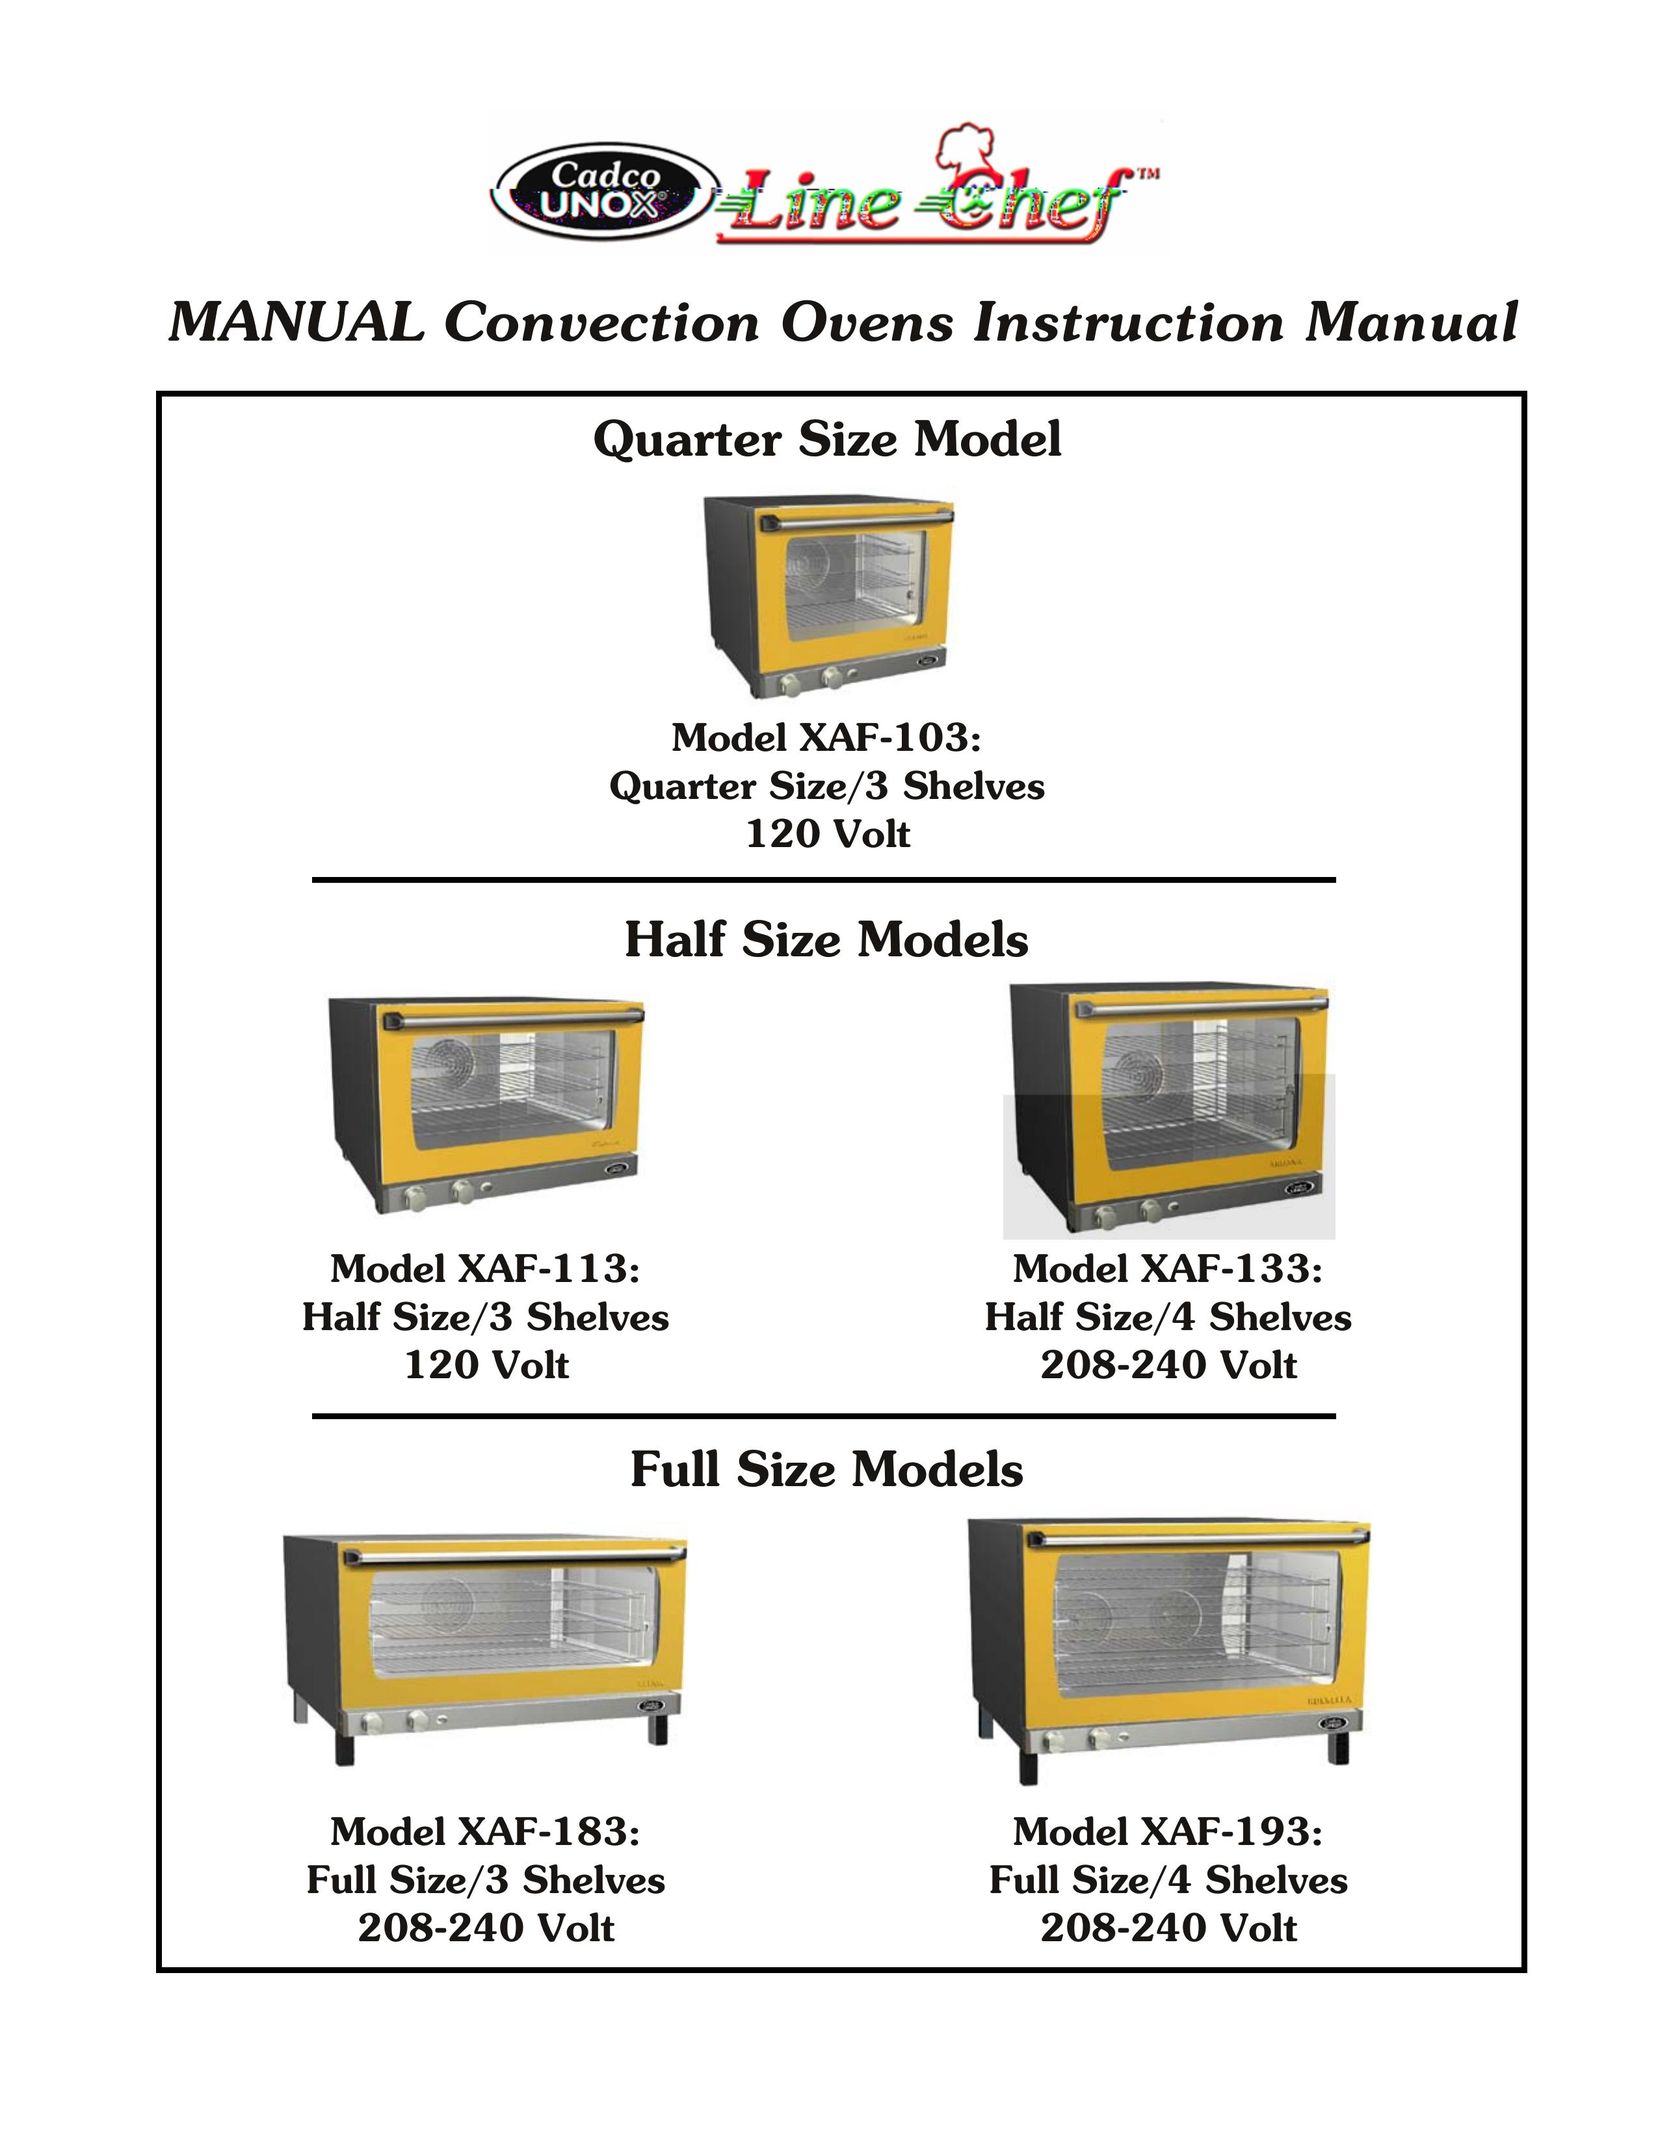 Cadco XAF-193 Convection Oven User Manual